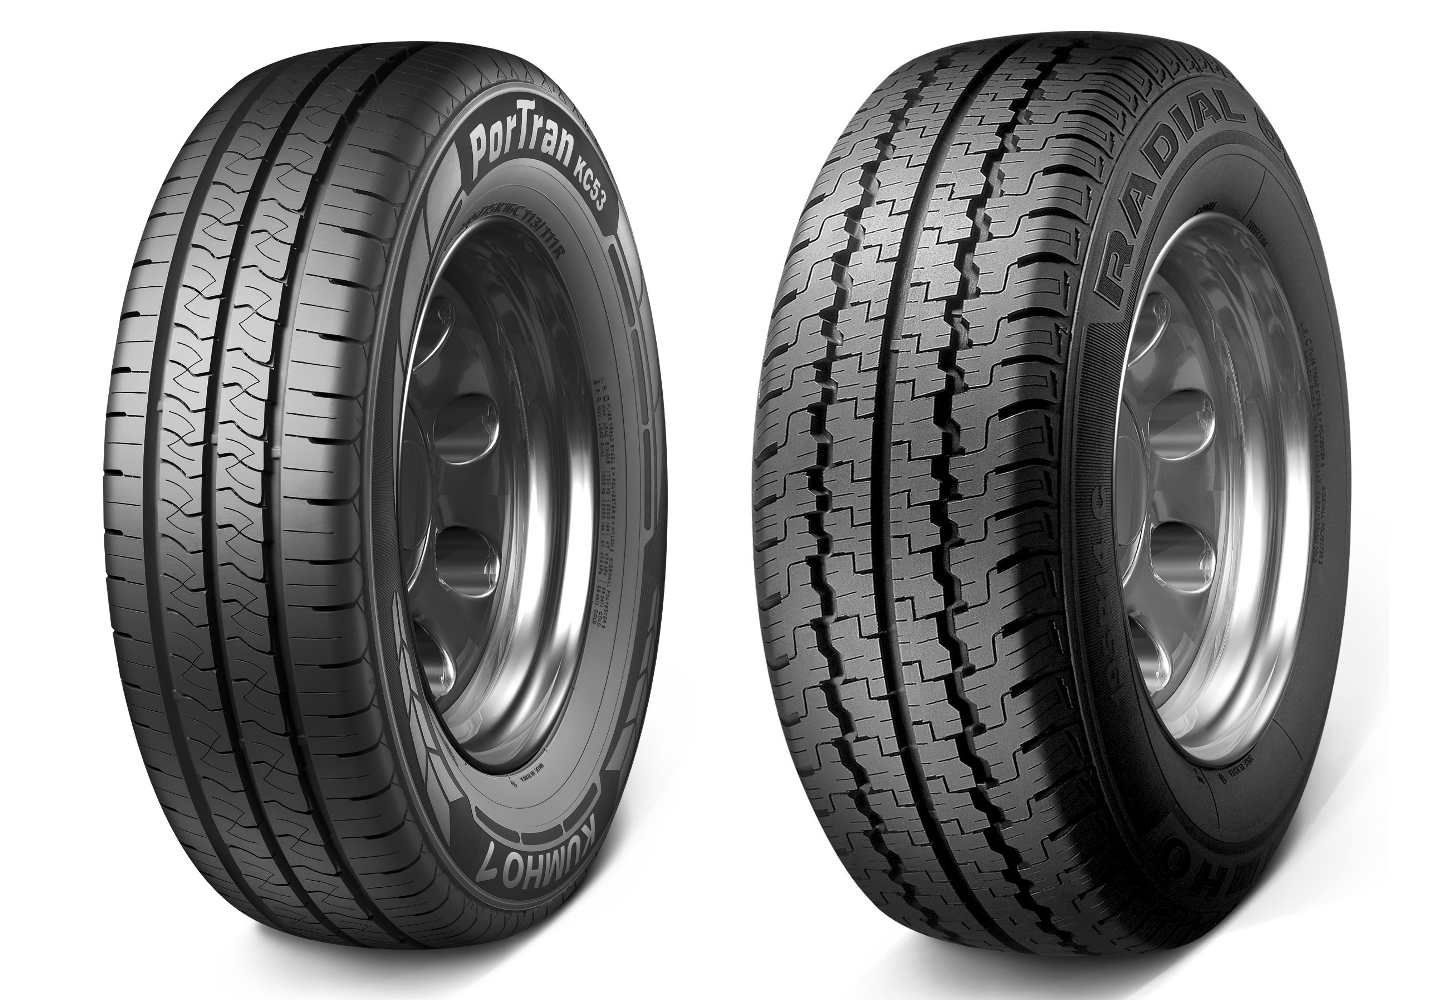 New Kumho Portran - 857 Tyrepress to replace KC53 sizes van in Radial 15-16” tyre